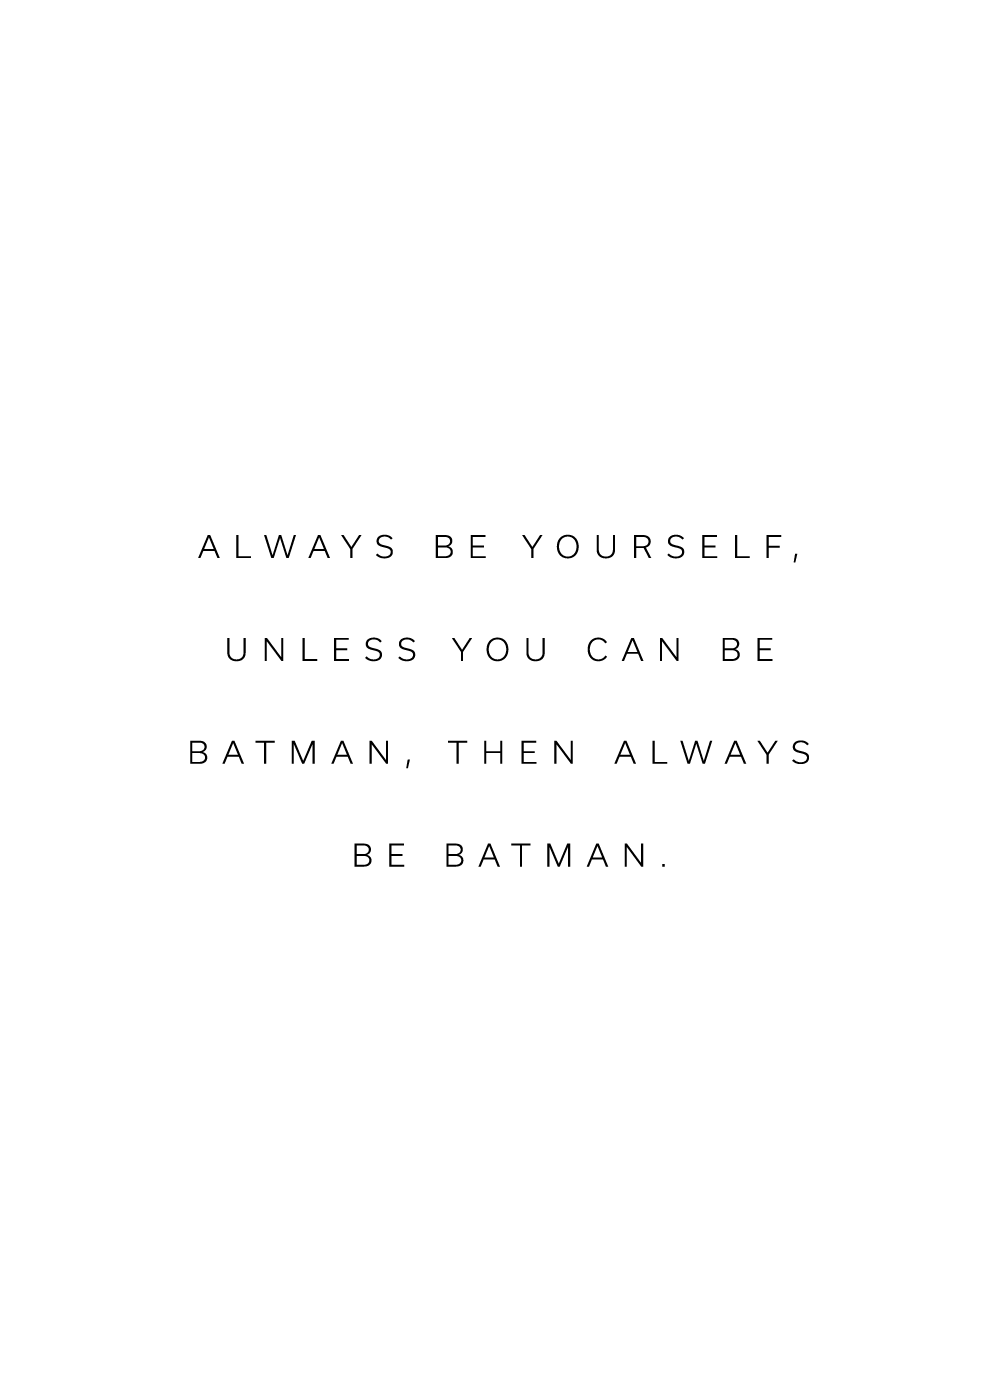 "Always be yourself, unless you can be batman, then always be batman" citatplakat